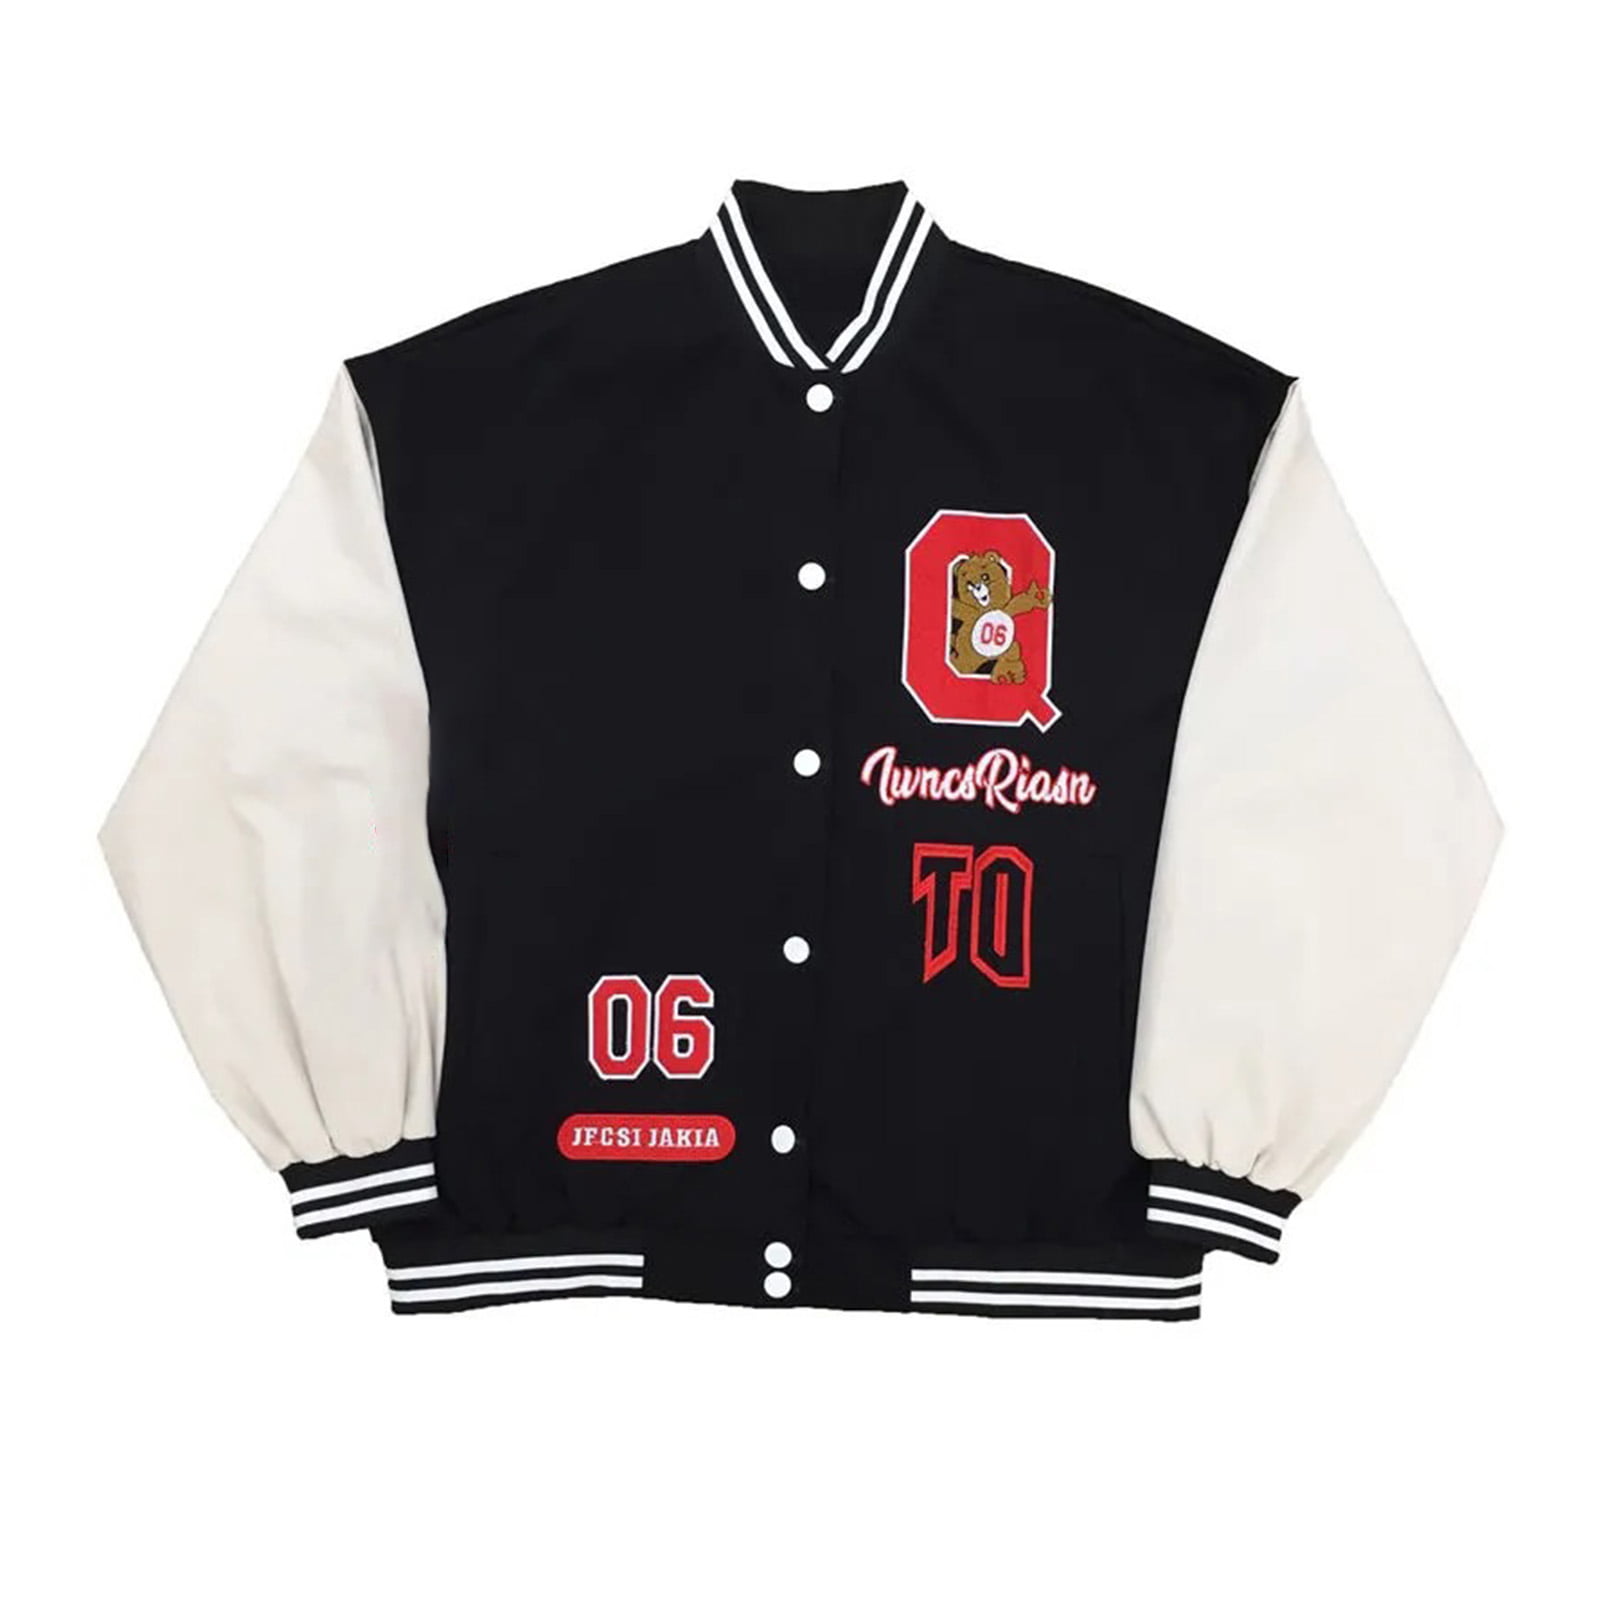 Classic Vintage Oversized Baseball Uniform Jacket Chic Simple Preppy Style Y2K Casual Pilot Jacket Outwear For Unisex